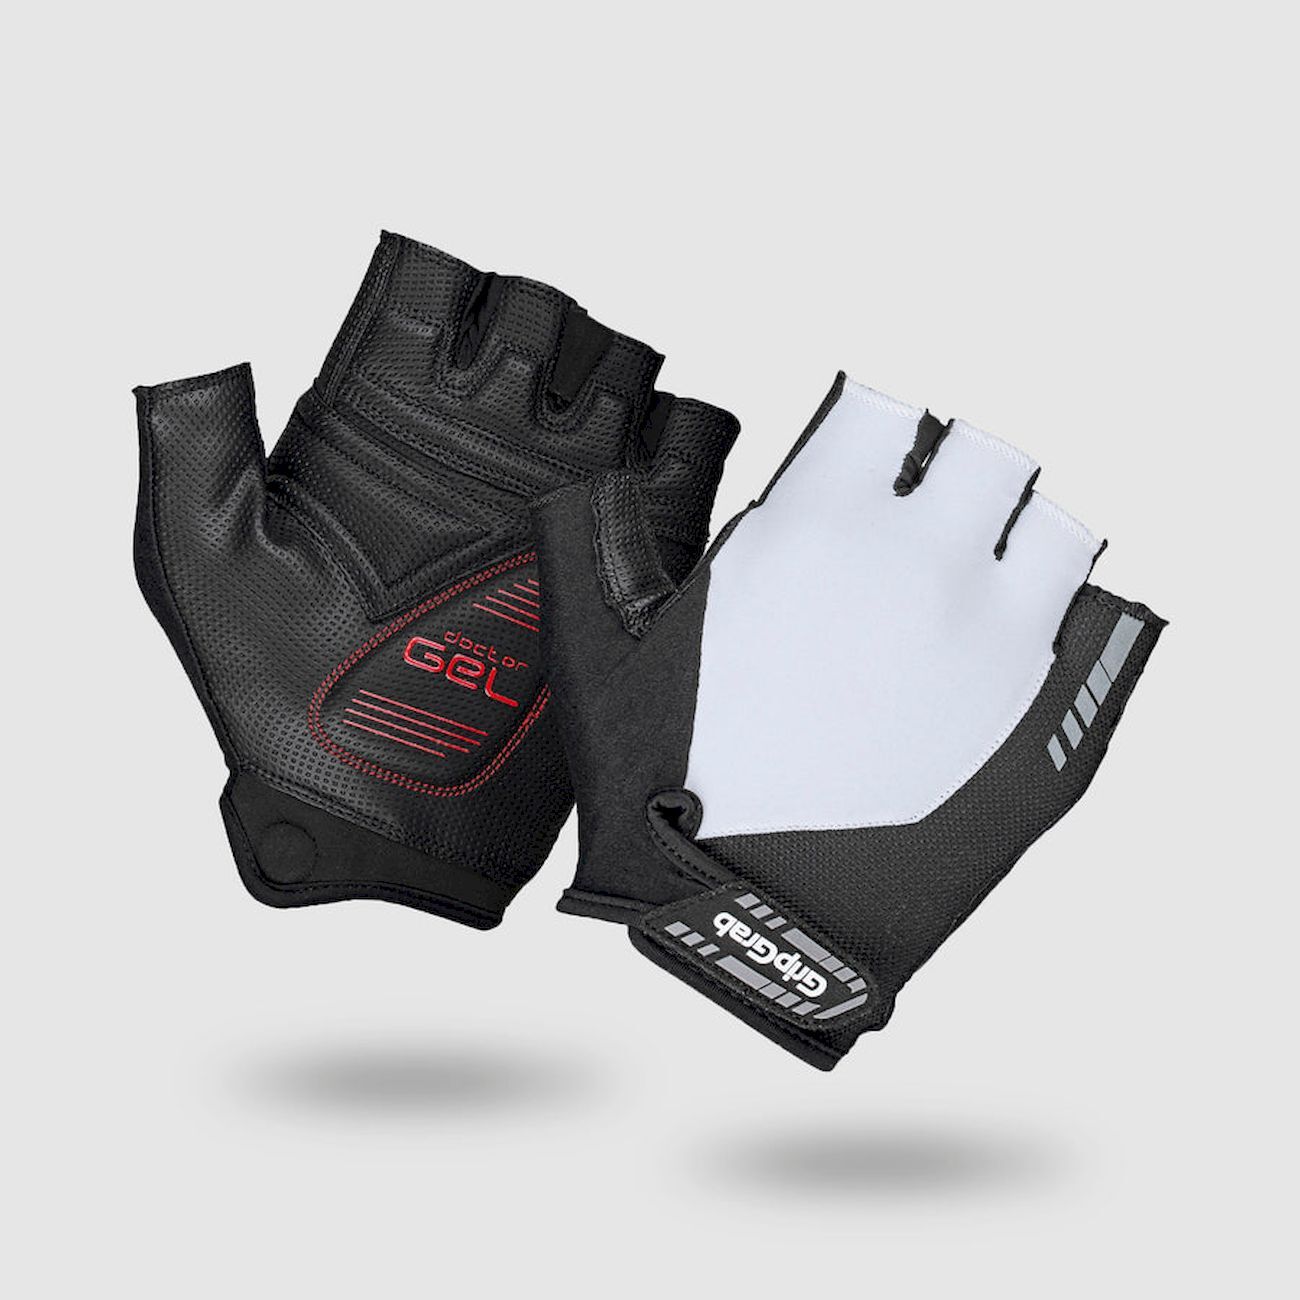 Grip Grab ProGel Padded Gloves - Guanti corti ciclismo - Uomo